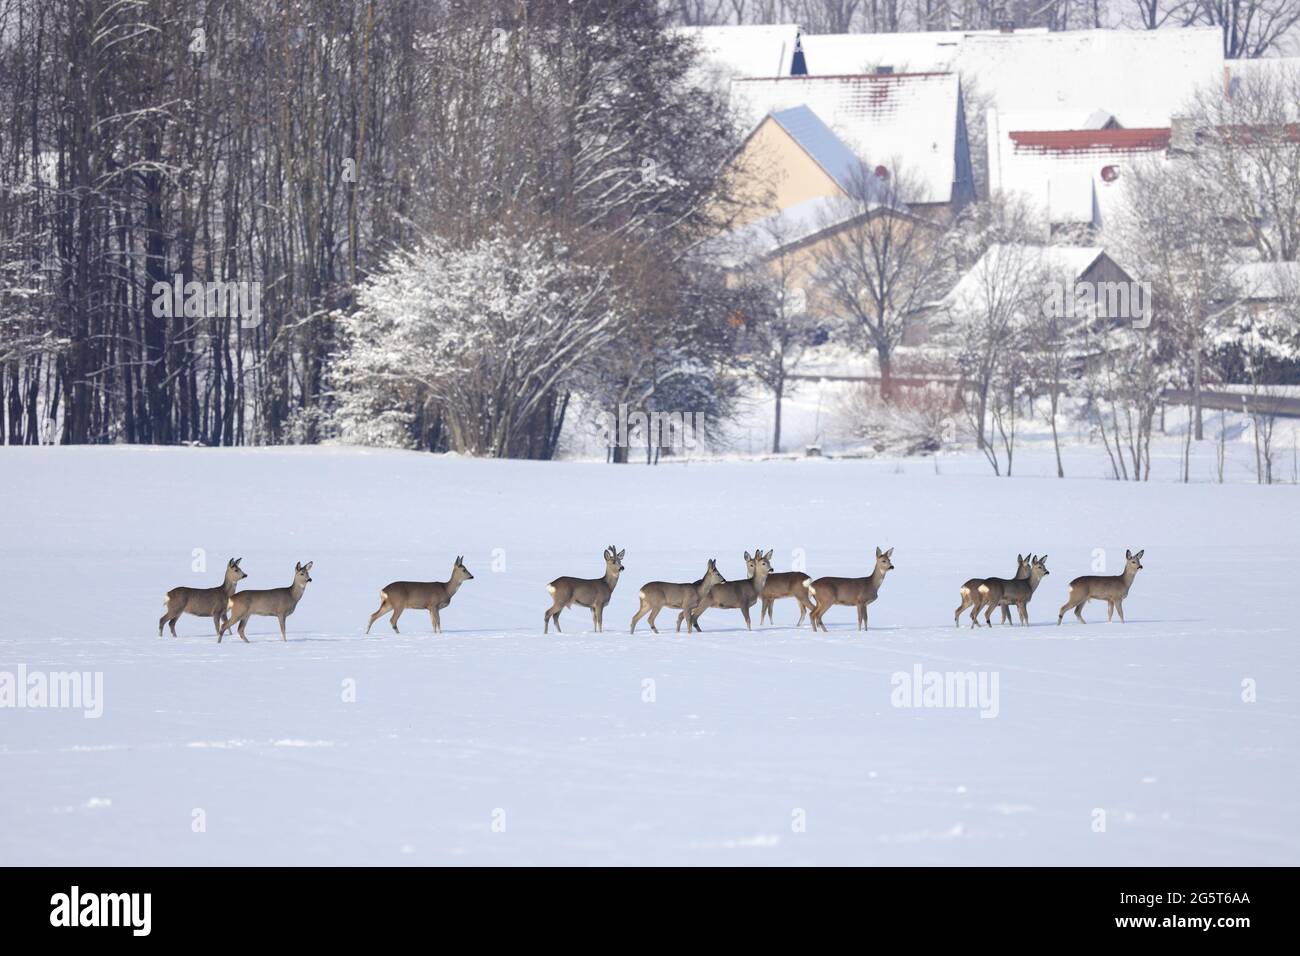 roe deer (Capreolus capreolus), Large group of roe deers in a snowy field, village in the background, Germany, Baden-Wuerttemberg Stock Photo